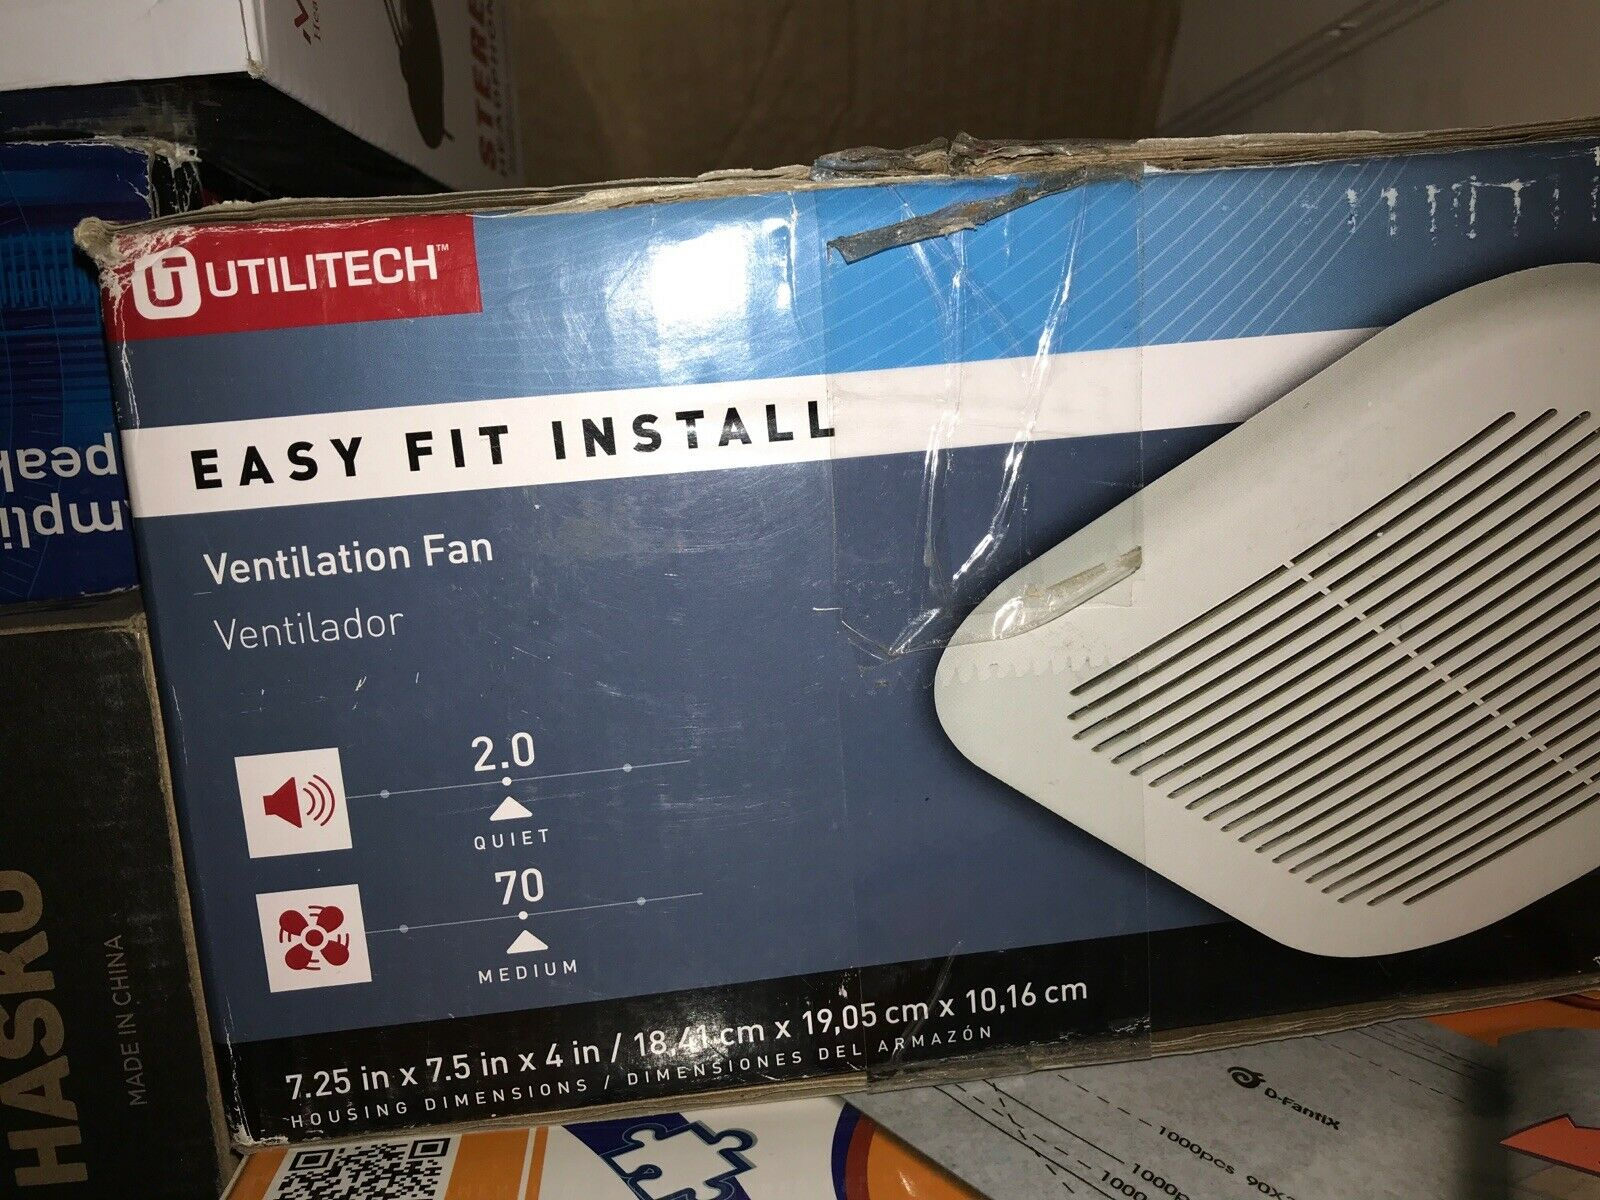 Utilitech Easy Fit Install Ventilation Fan Model 7111 04 L throughout size 1600 X 1200